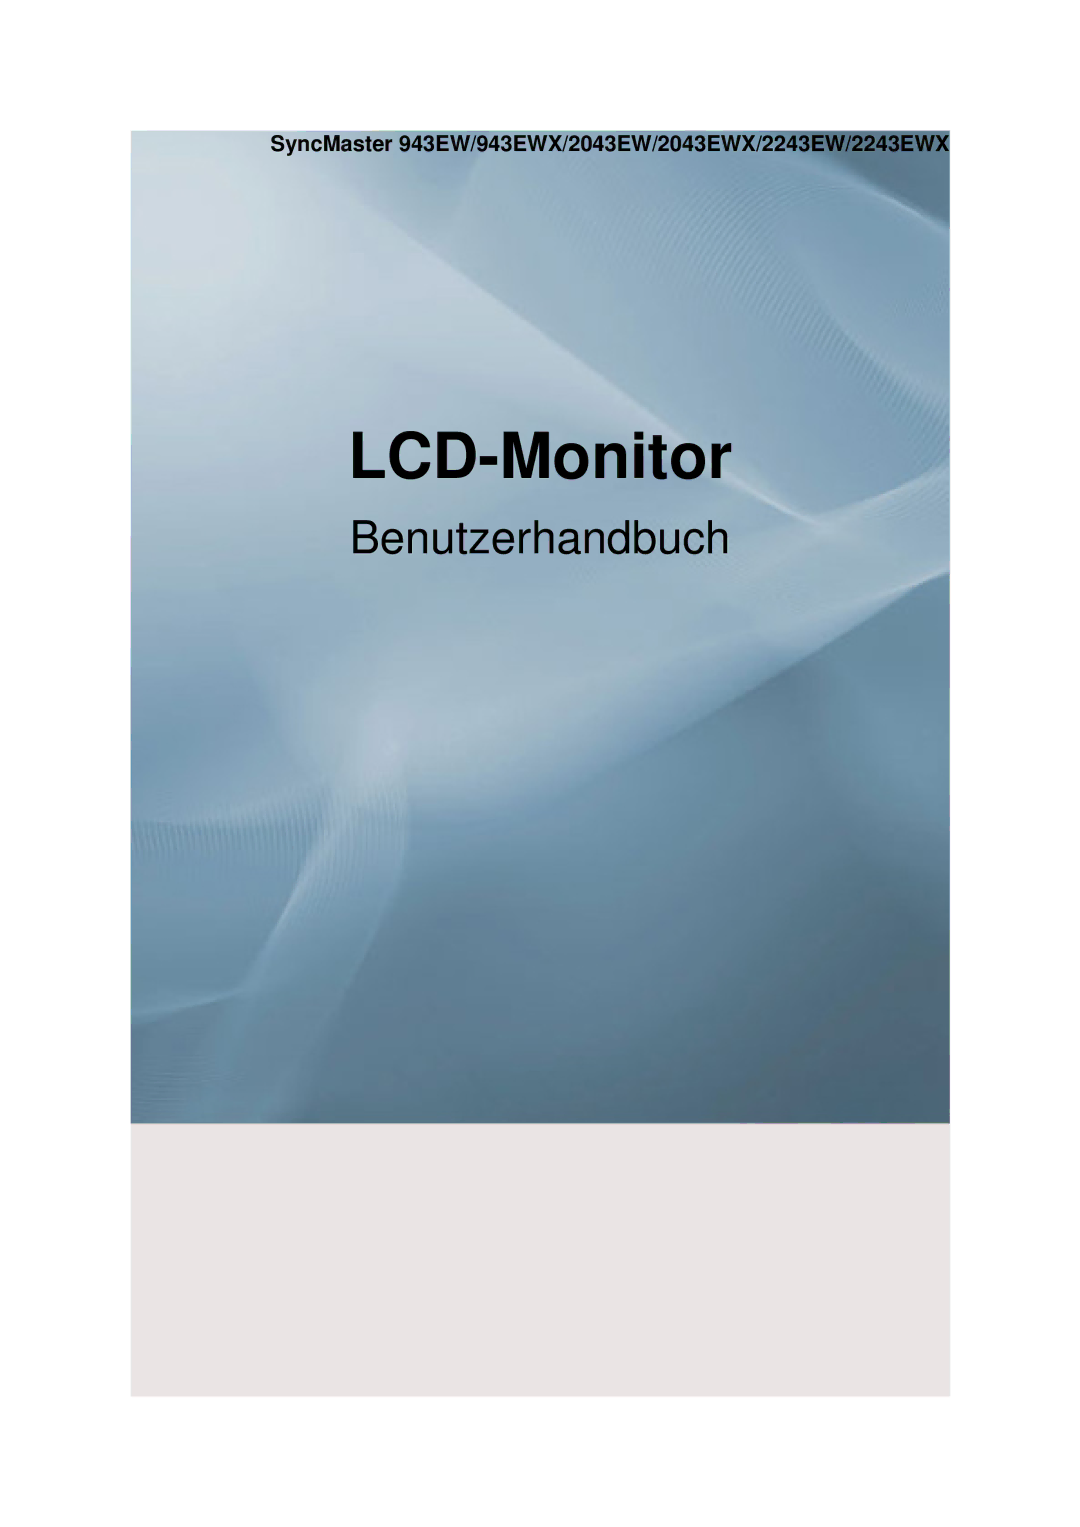 Samsung LS22MYDESC/EDC, LS22MYDEBCA/EN manual LCD-Monitor, SyncMaster 943EW/943EWX/2043EW/2043EWX/2243EW/2243EWX 